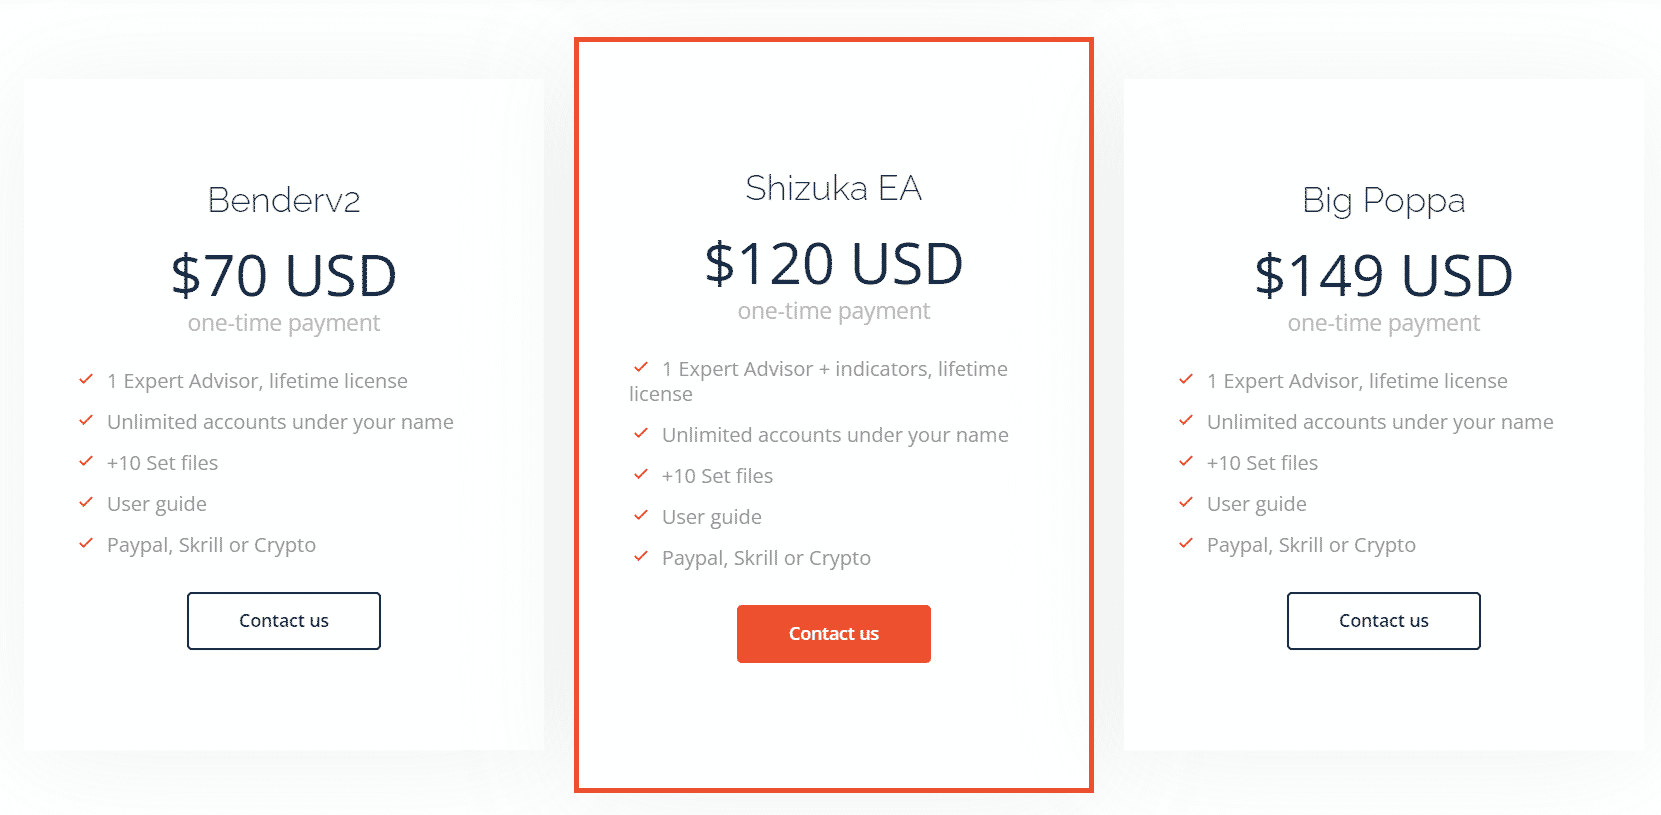 BigPoppa pricing details